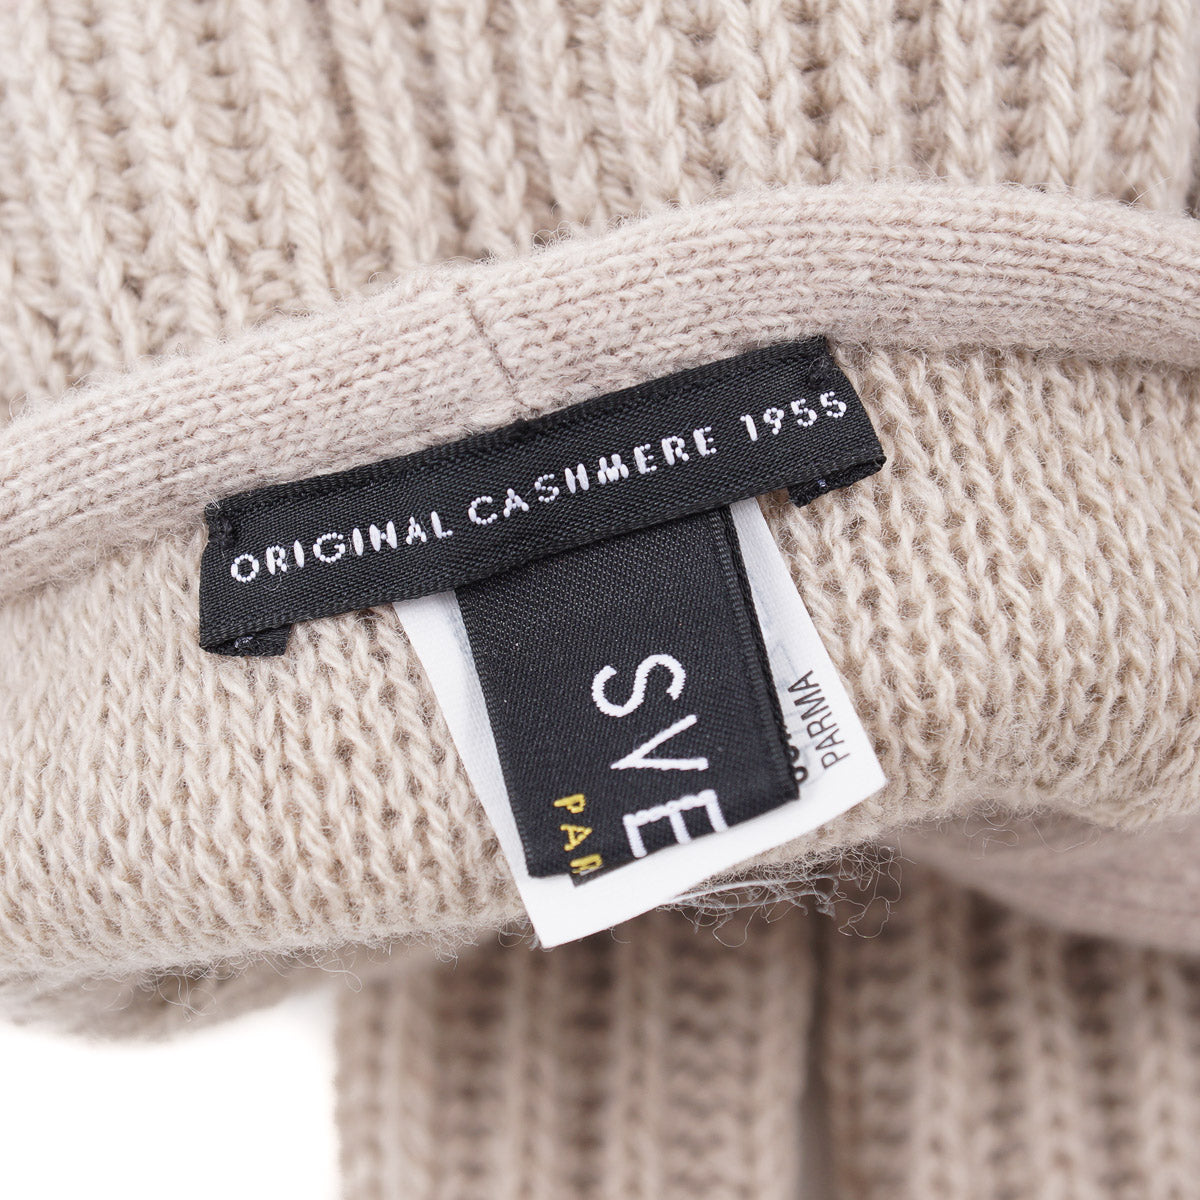 Svevo Knit Cashmere Gloves - Top Shelf Apparel